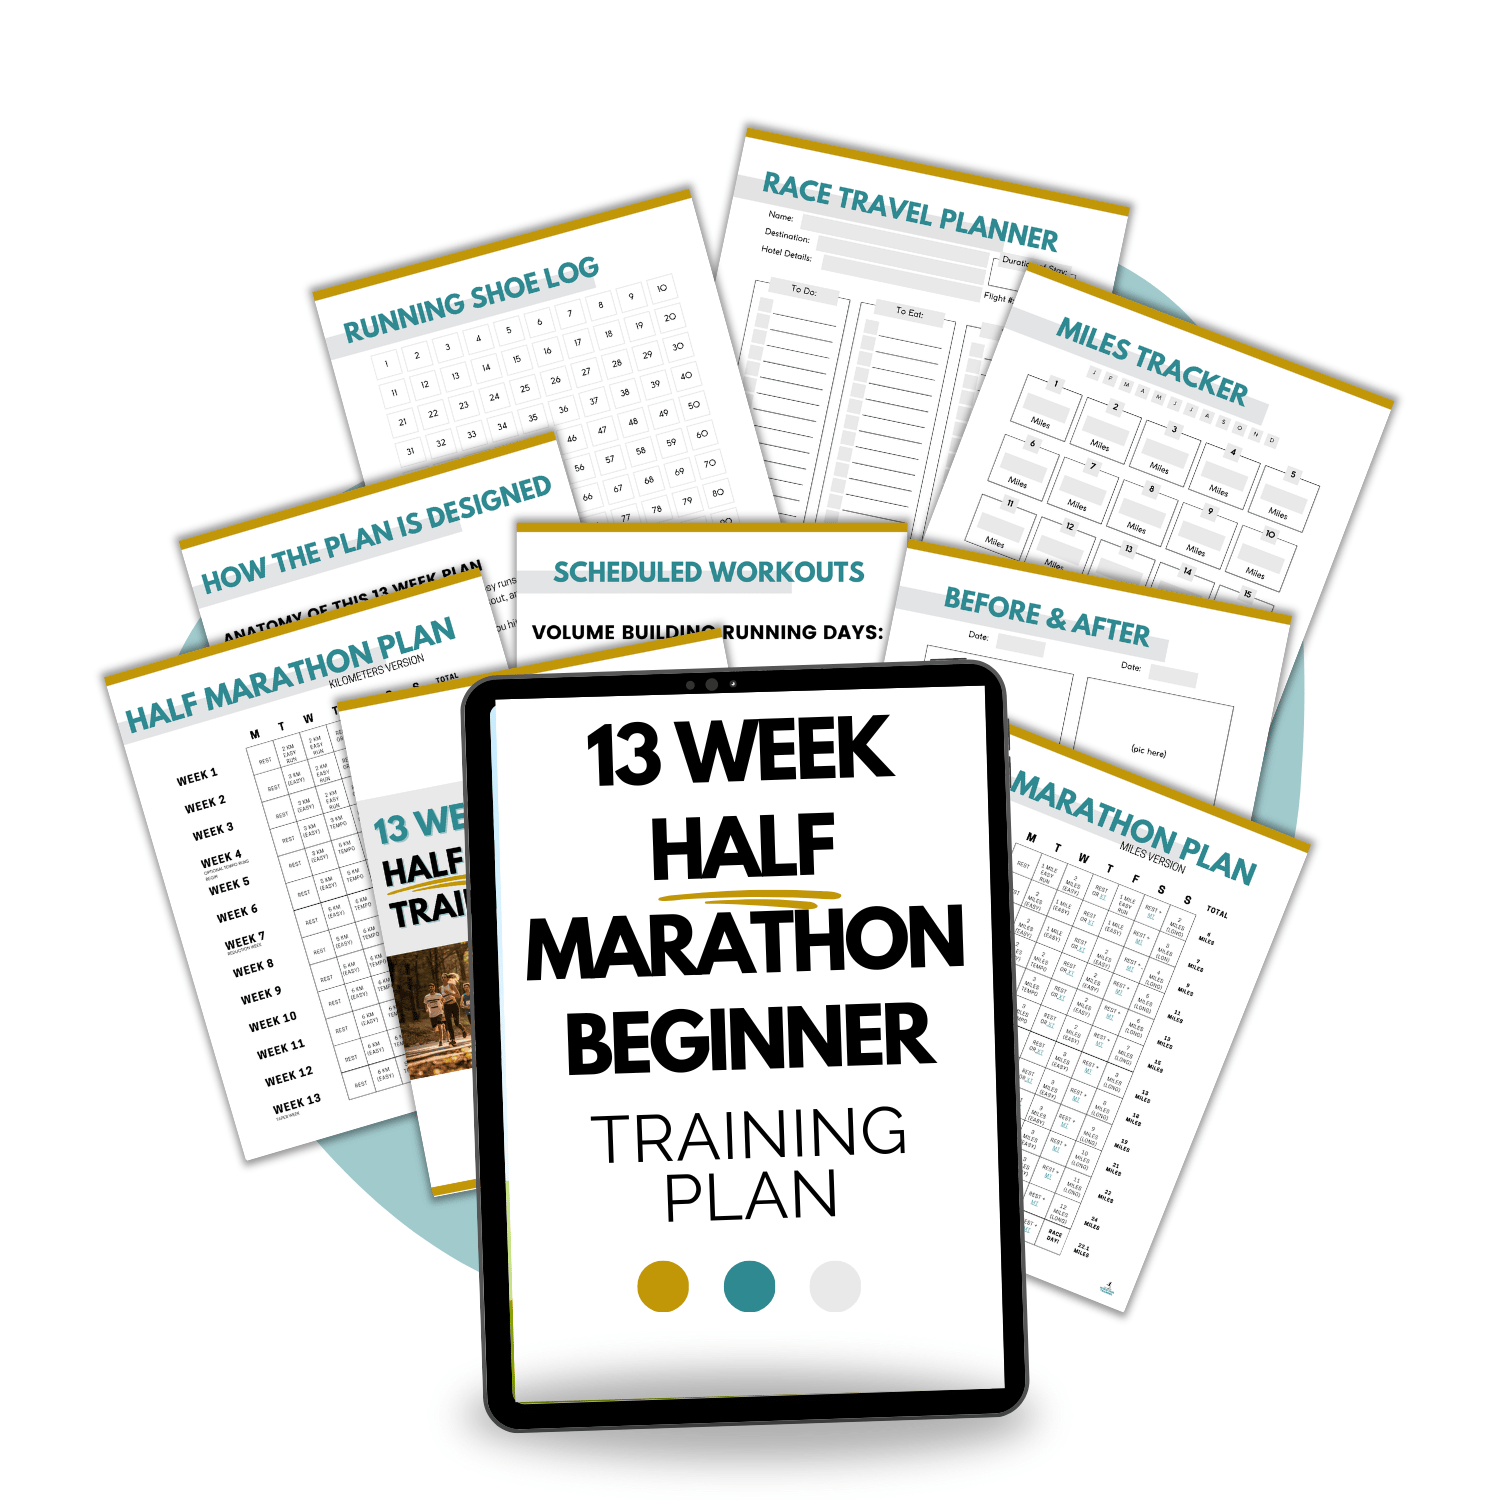 13 Week Half Marathon Training Plan Mockup